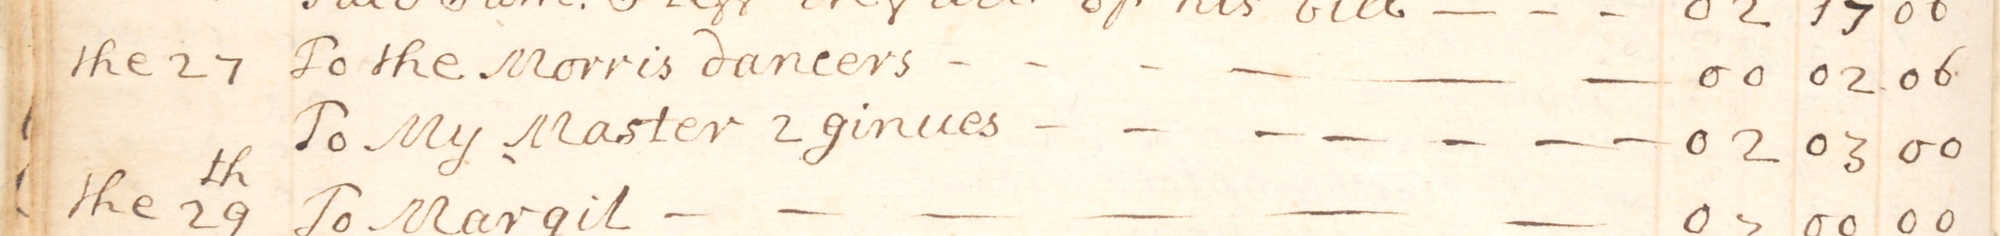 1700 document in handwritten English referring to morris dancers